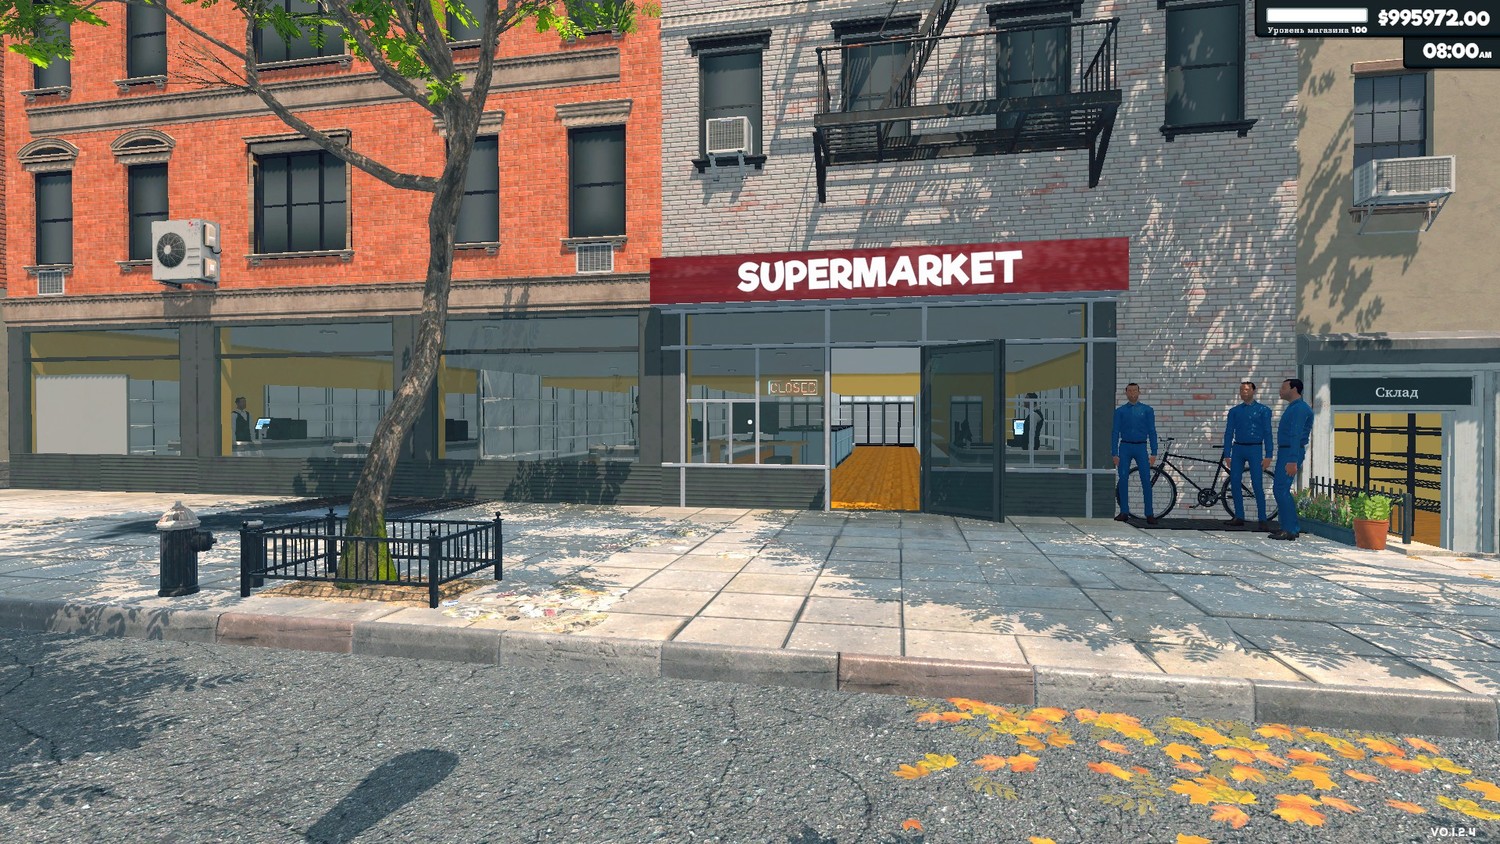 Supermarket Simulator: SaveGame (a fully upgraded supermarket) [0.12.4]